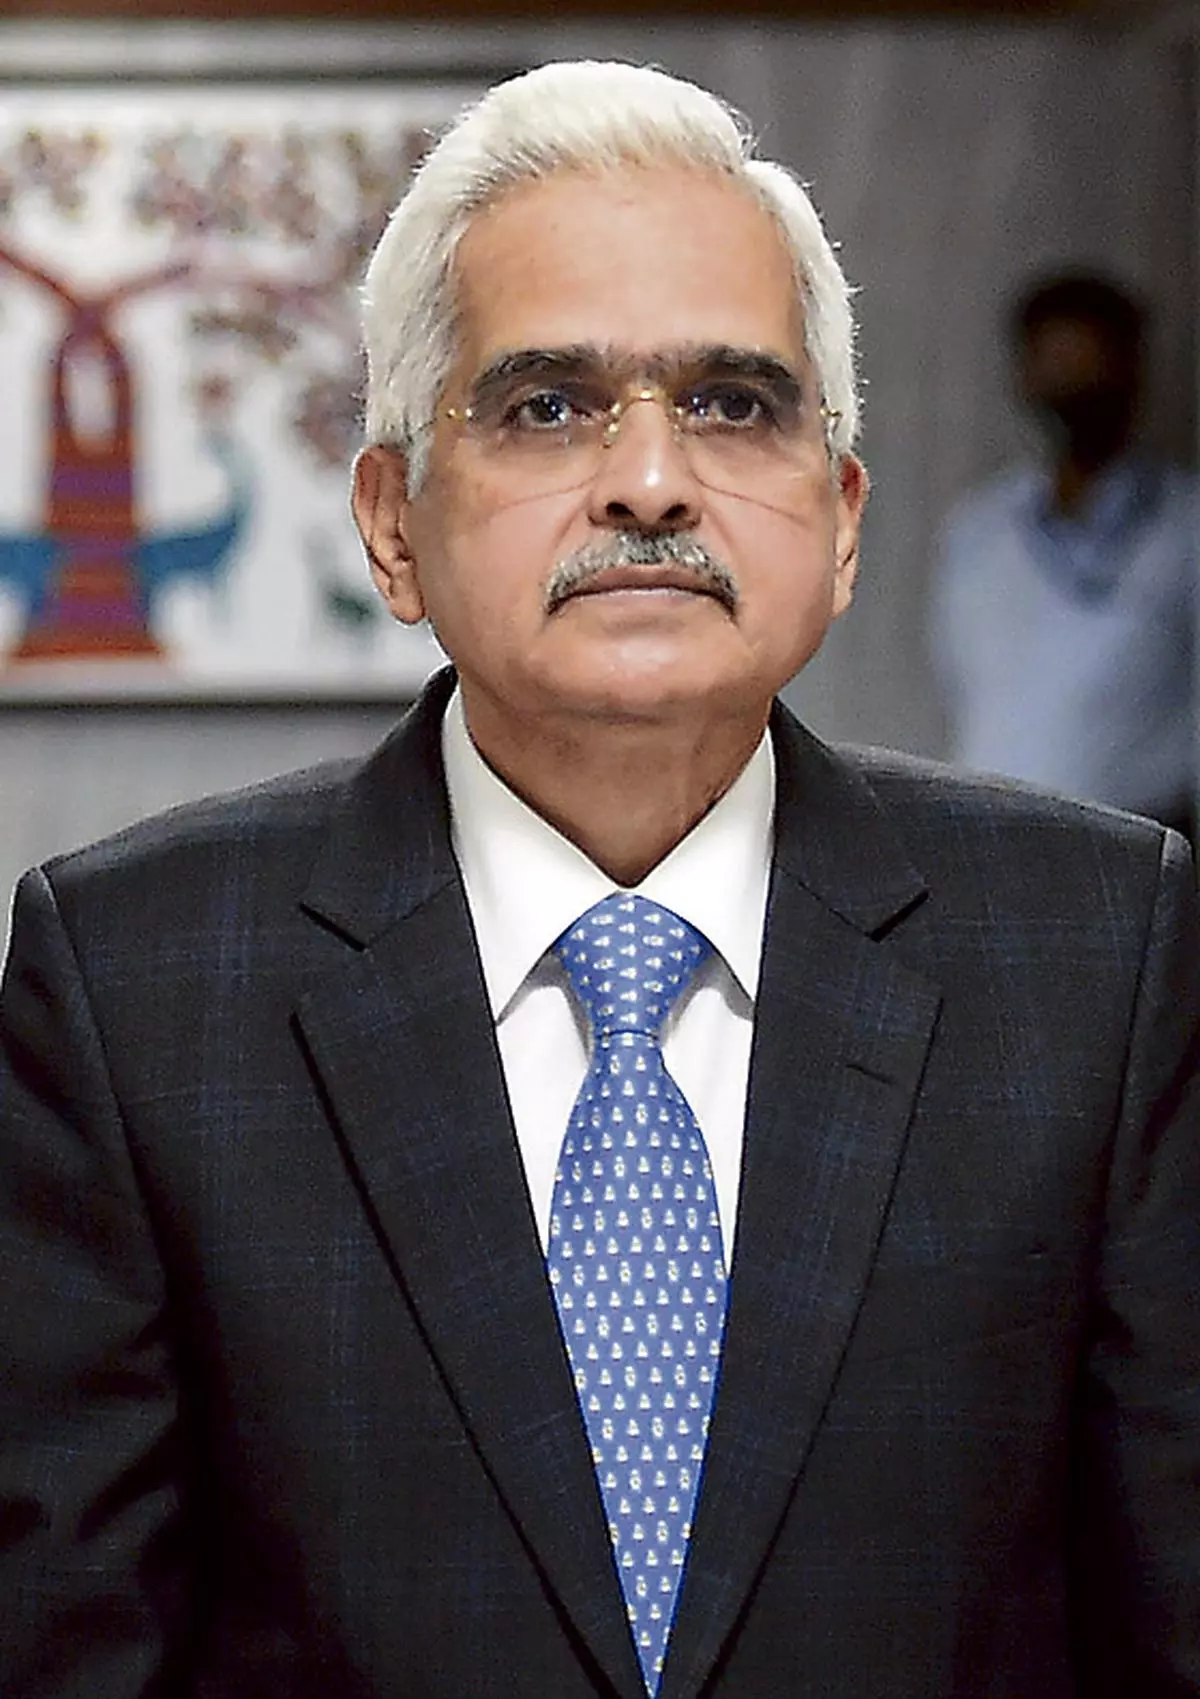 Reserve Bank of India (RBI) Governor Shaktikanta Das